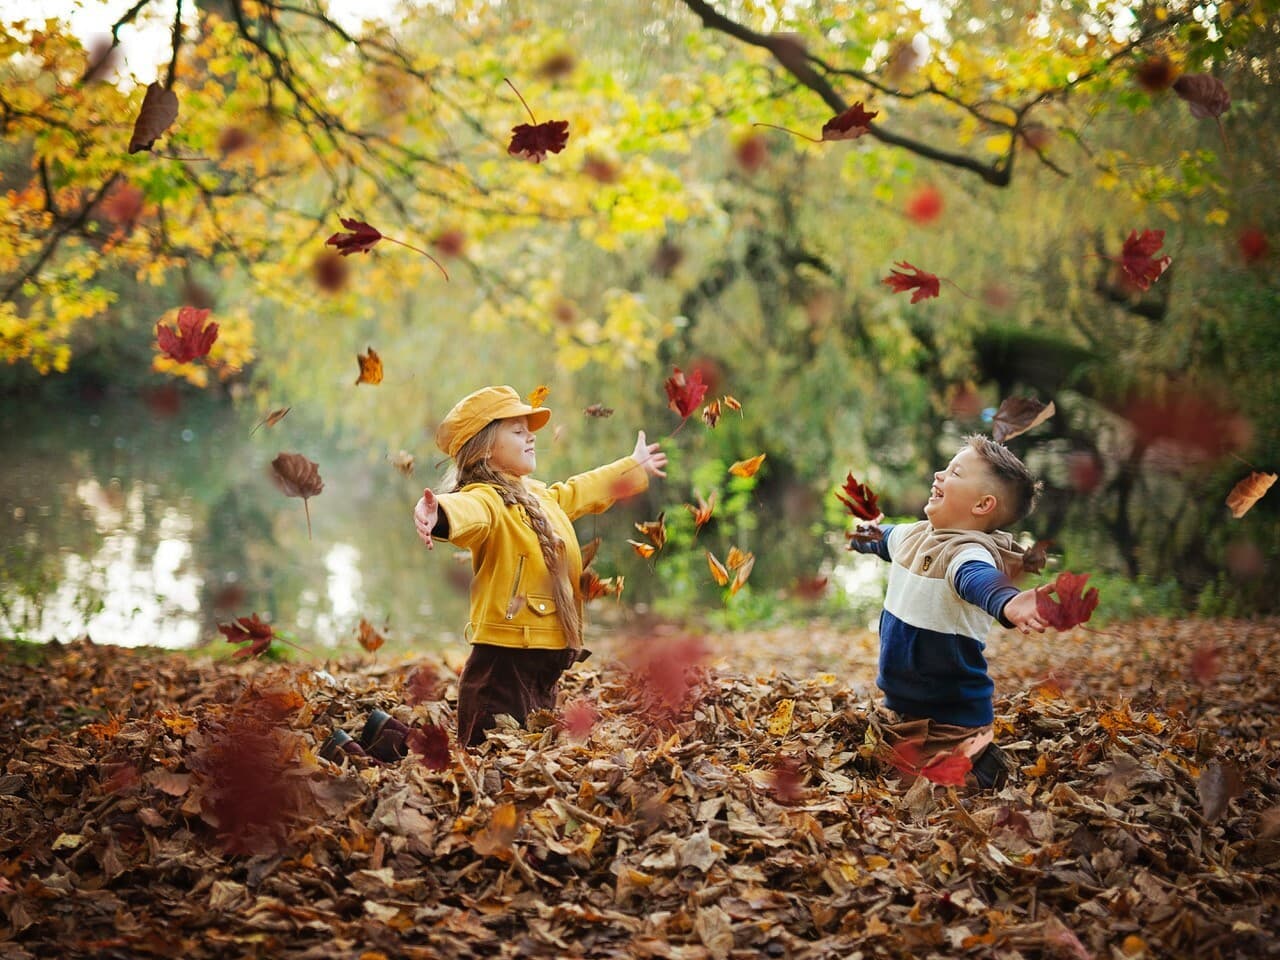 Autumn Days by Andrea Cseke